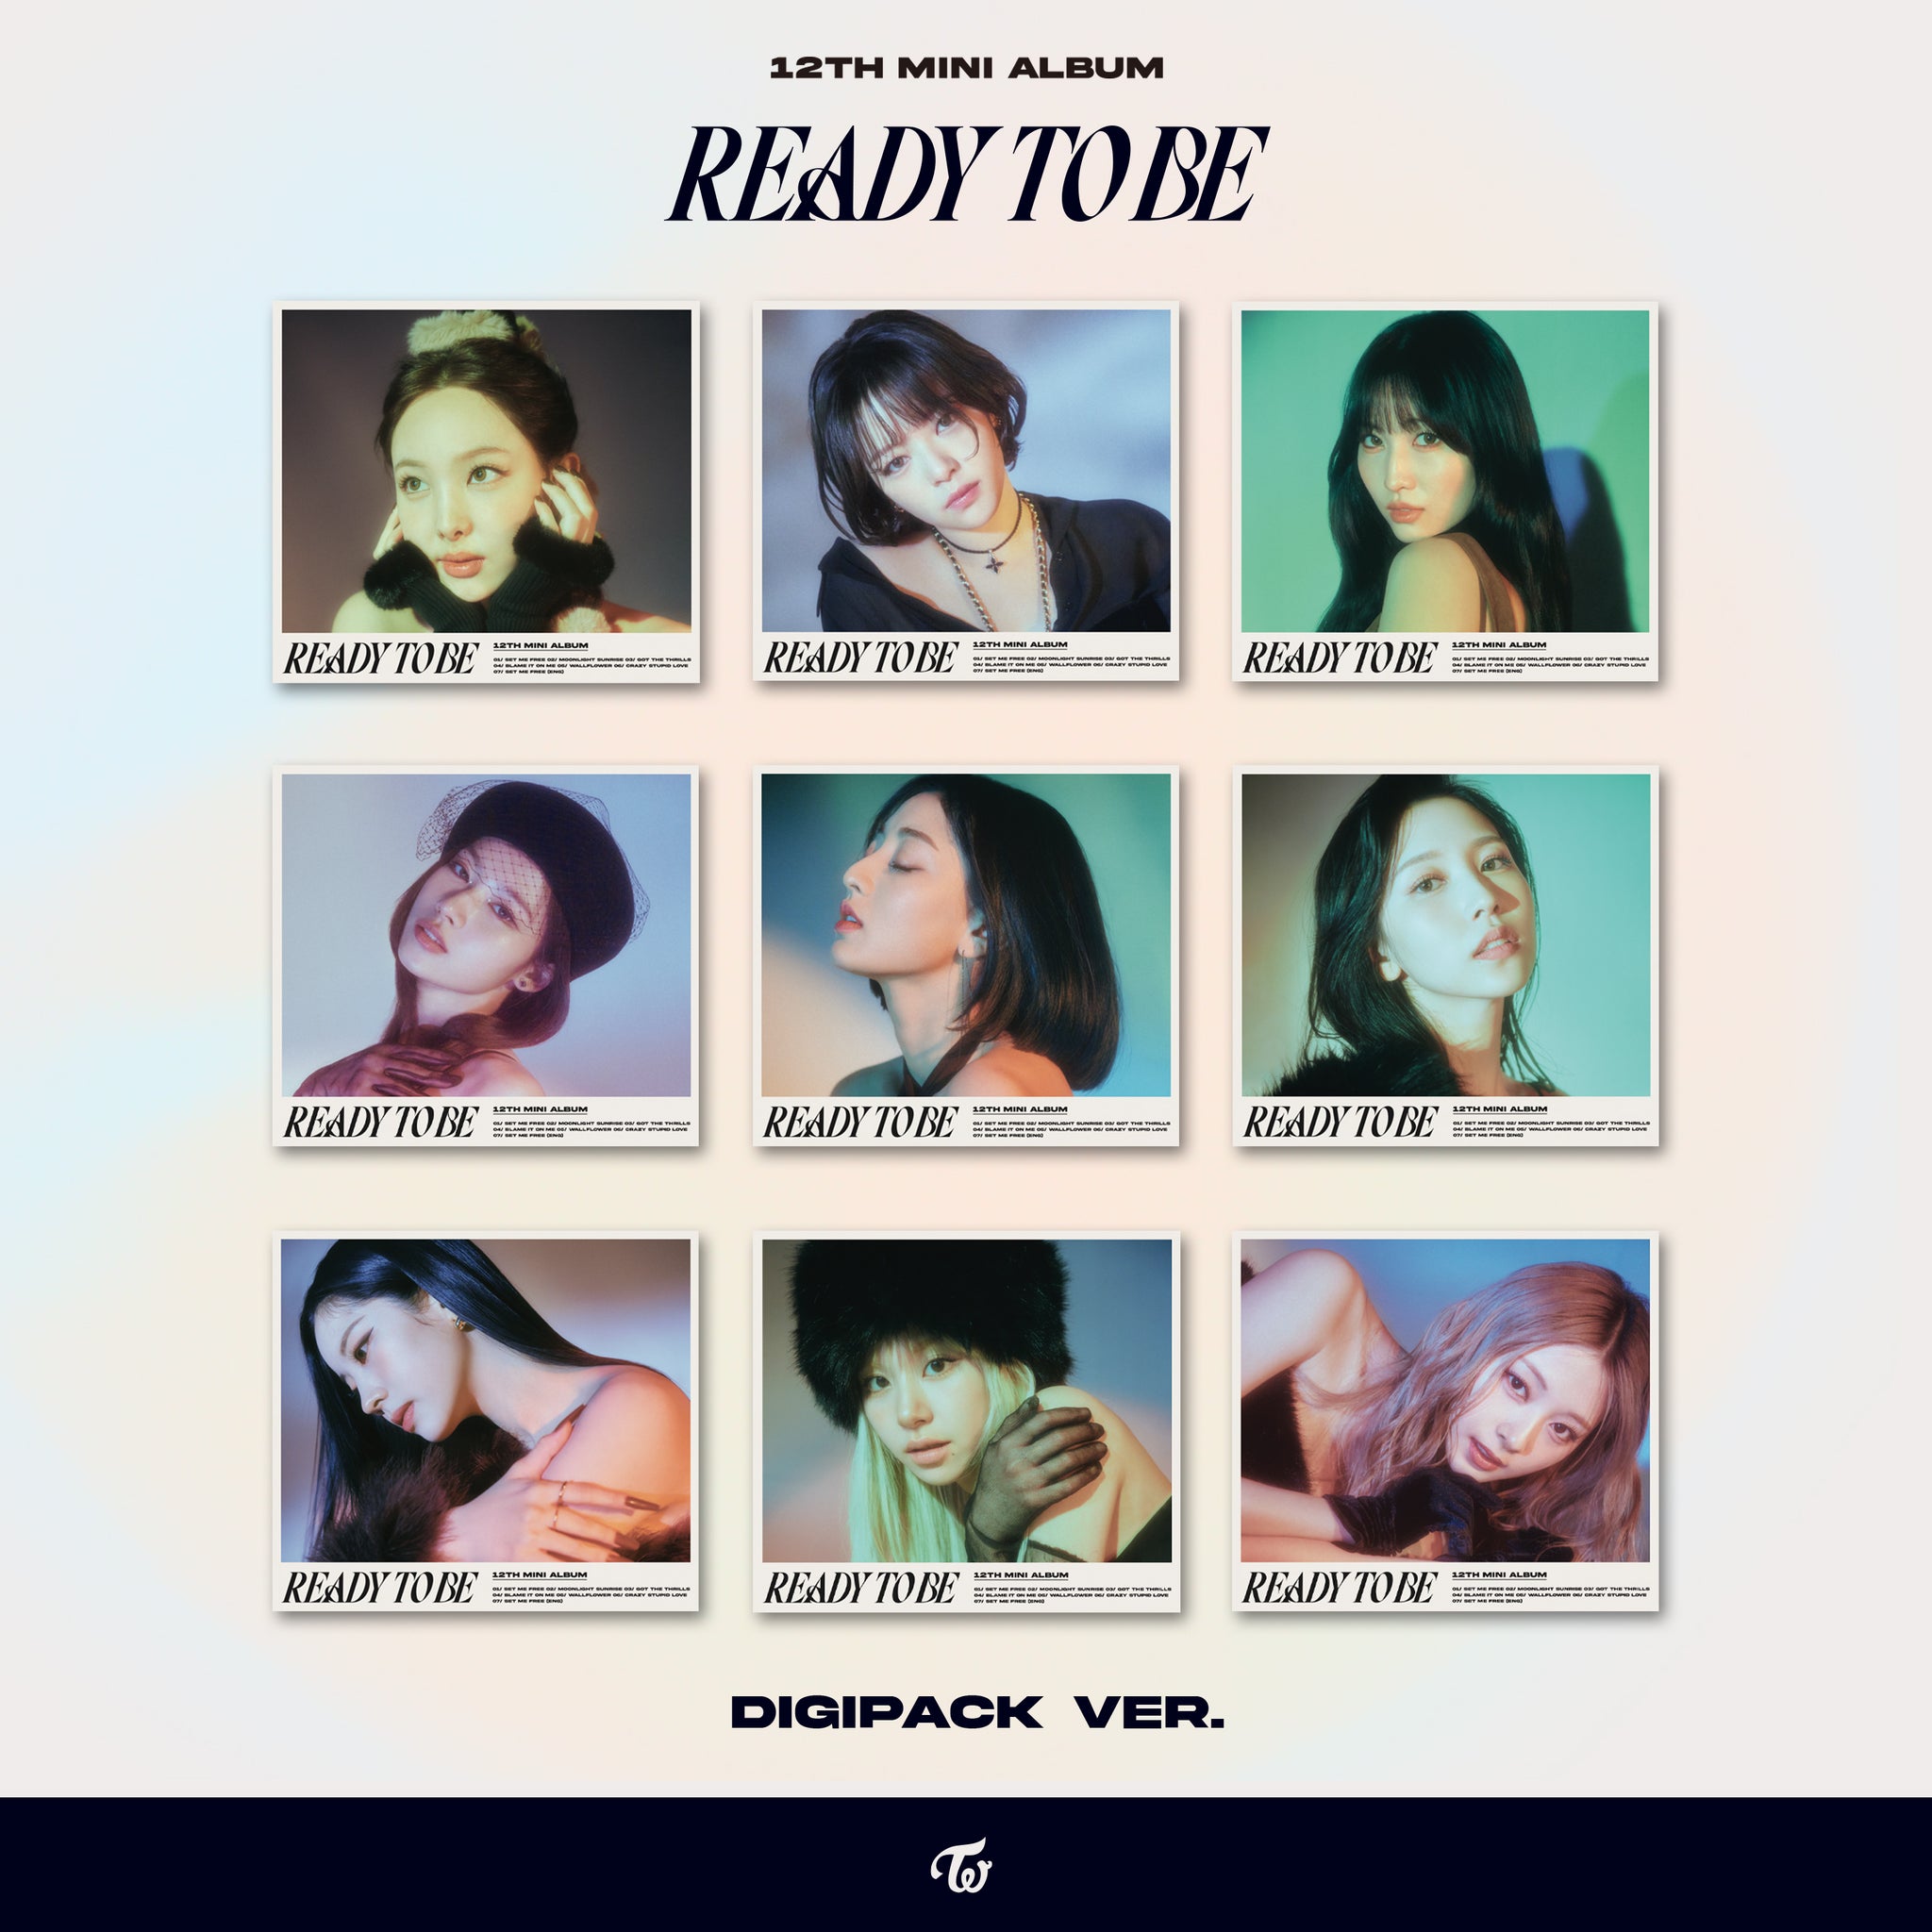 PRE-ORDER] TWICE - With YOU-th [Digipack ver.] + JYP Shop Photocard Album  version Dahyun ver.